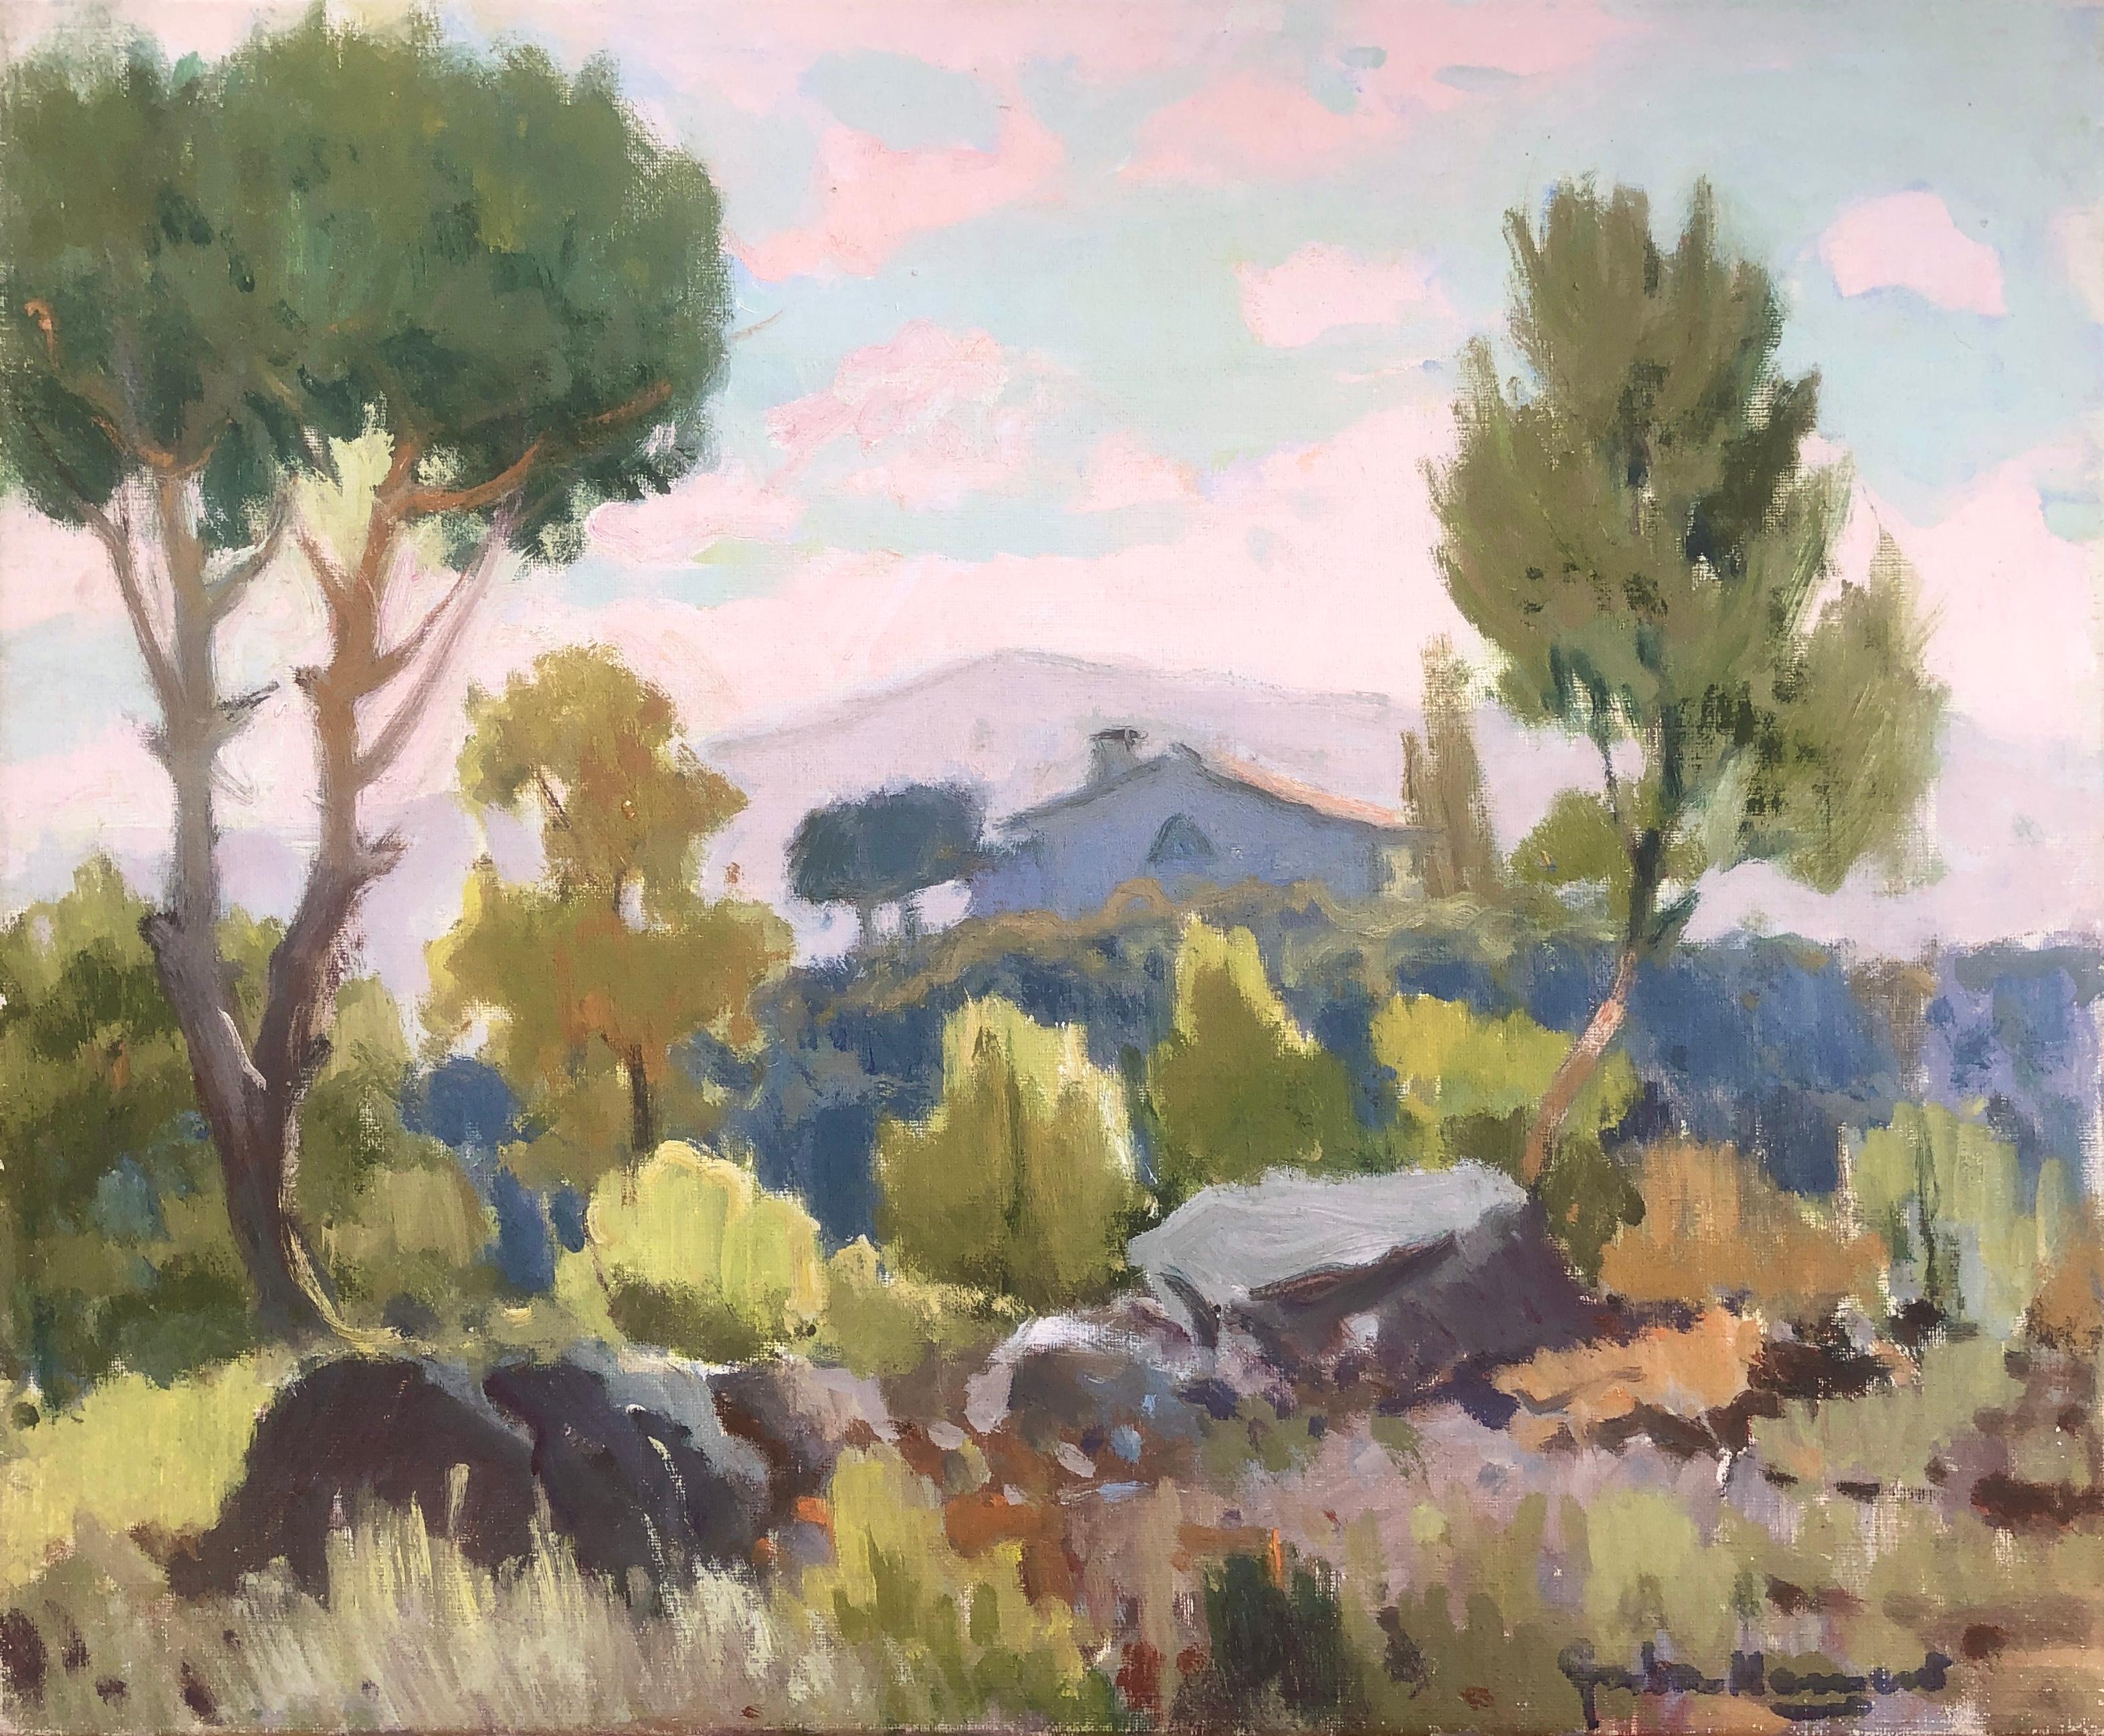 Antonio Sala Herrero Landscape Painting - Landscape with farmhouse Spain oil on canvas painting spanish